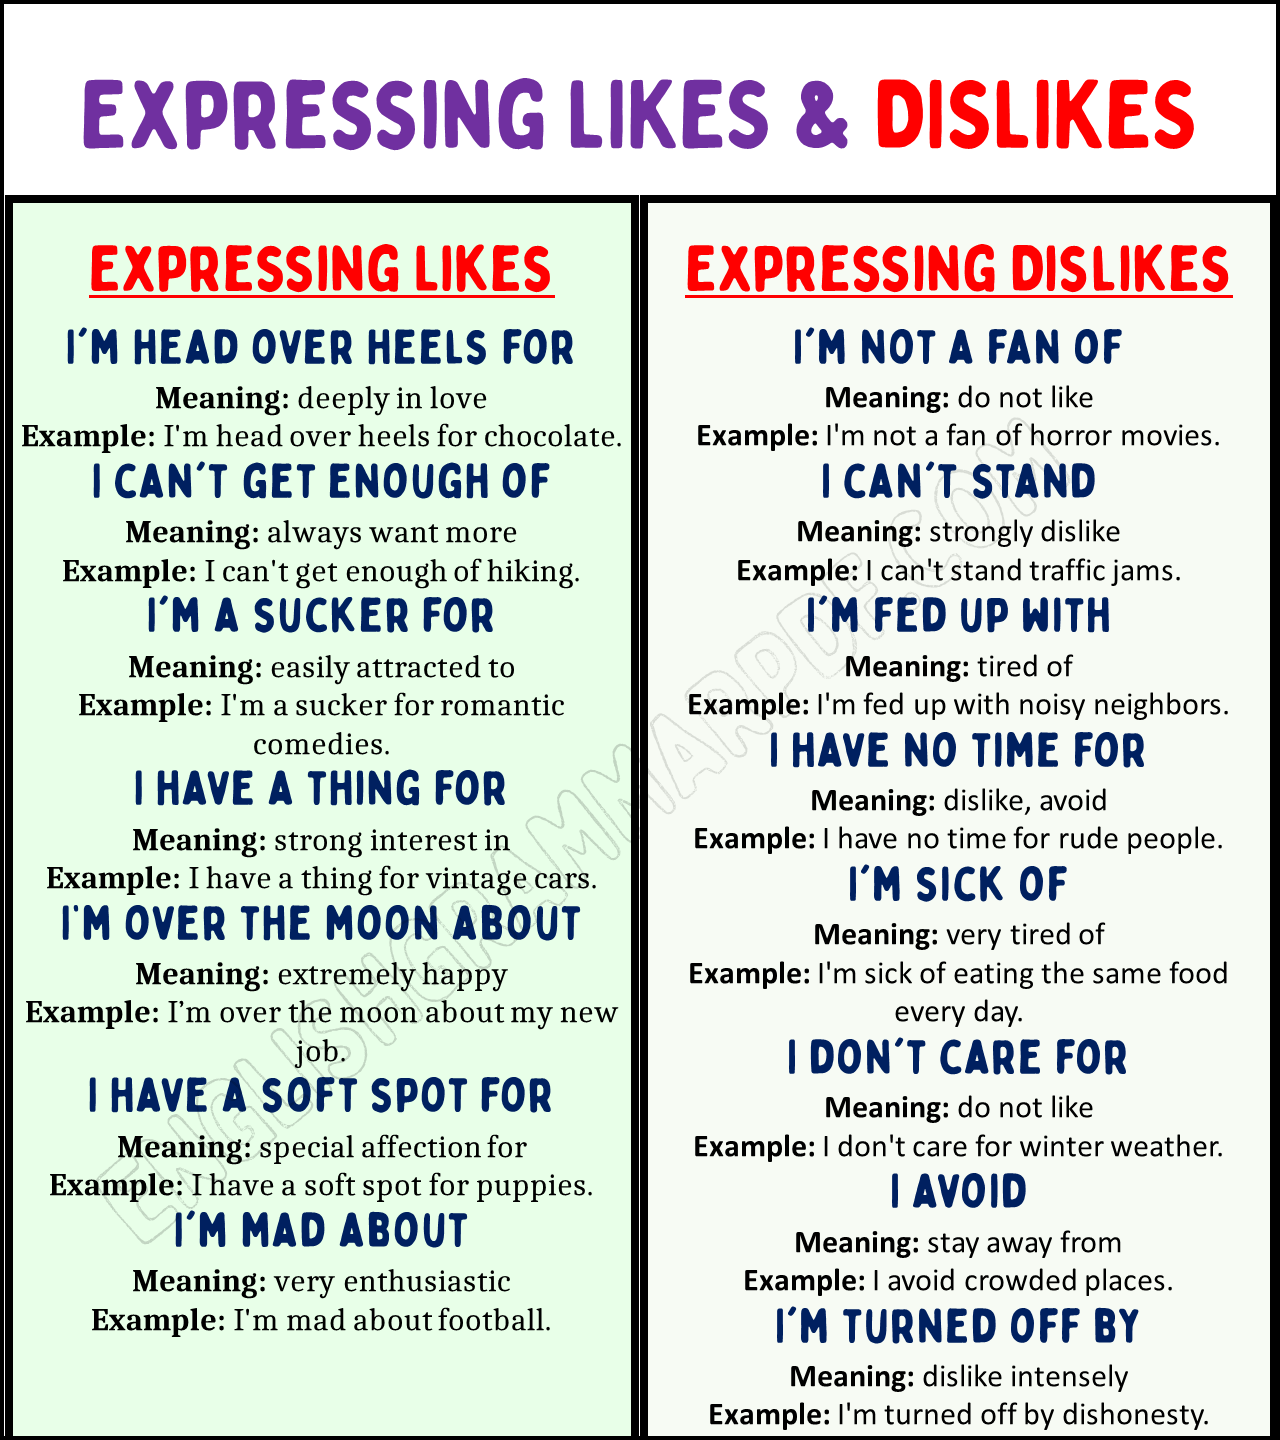 Expressing LIKES & DISLIKES